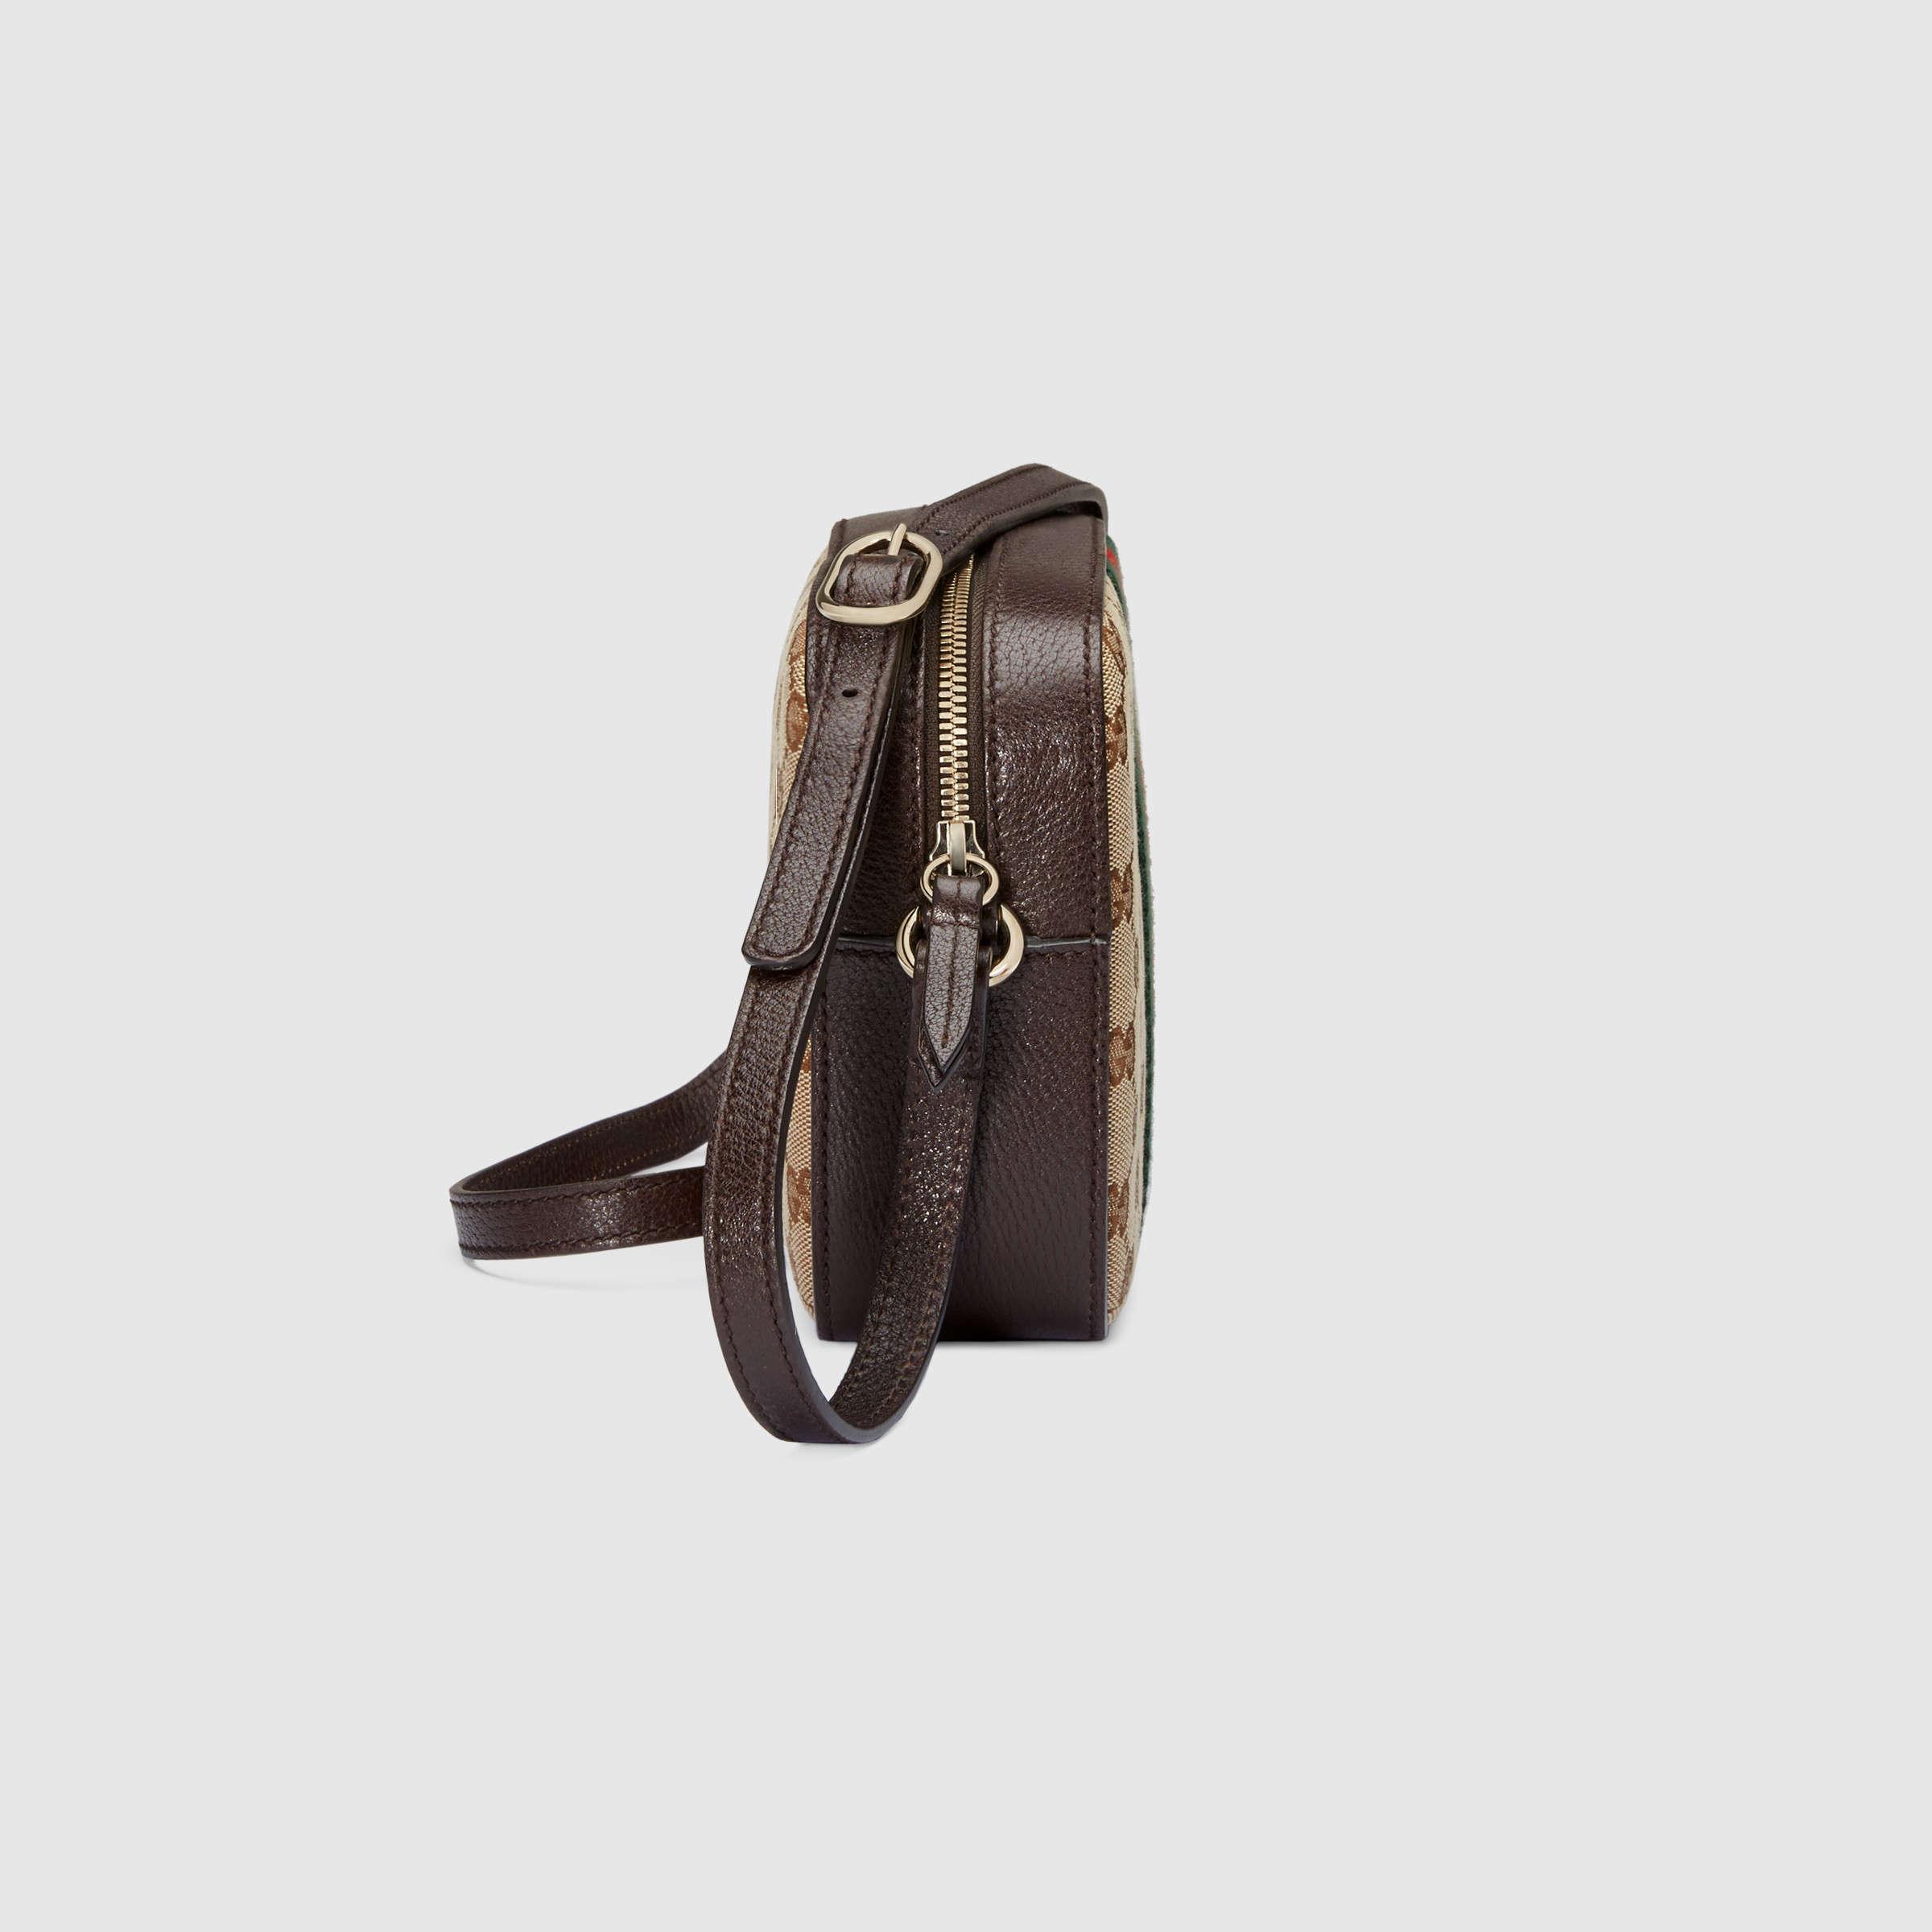 Lyst - Gucci Original GG Supreme Shoulder Bag in Brown